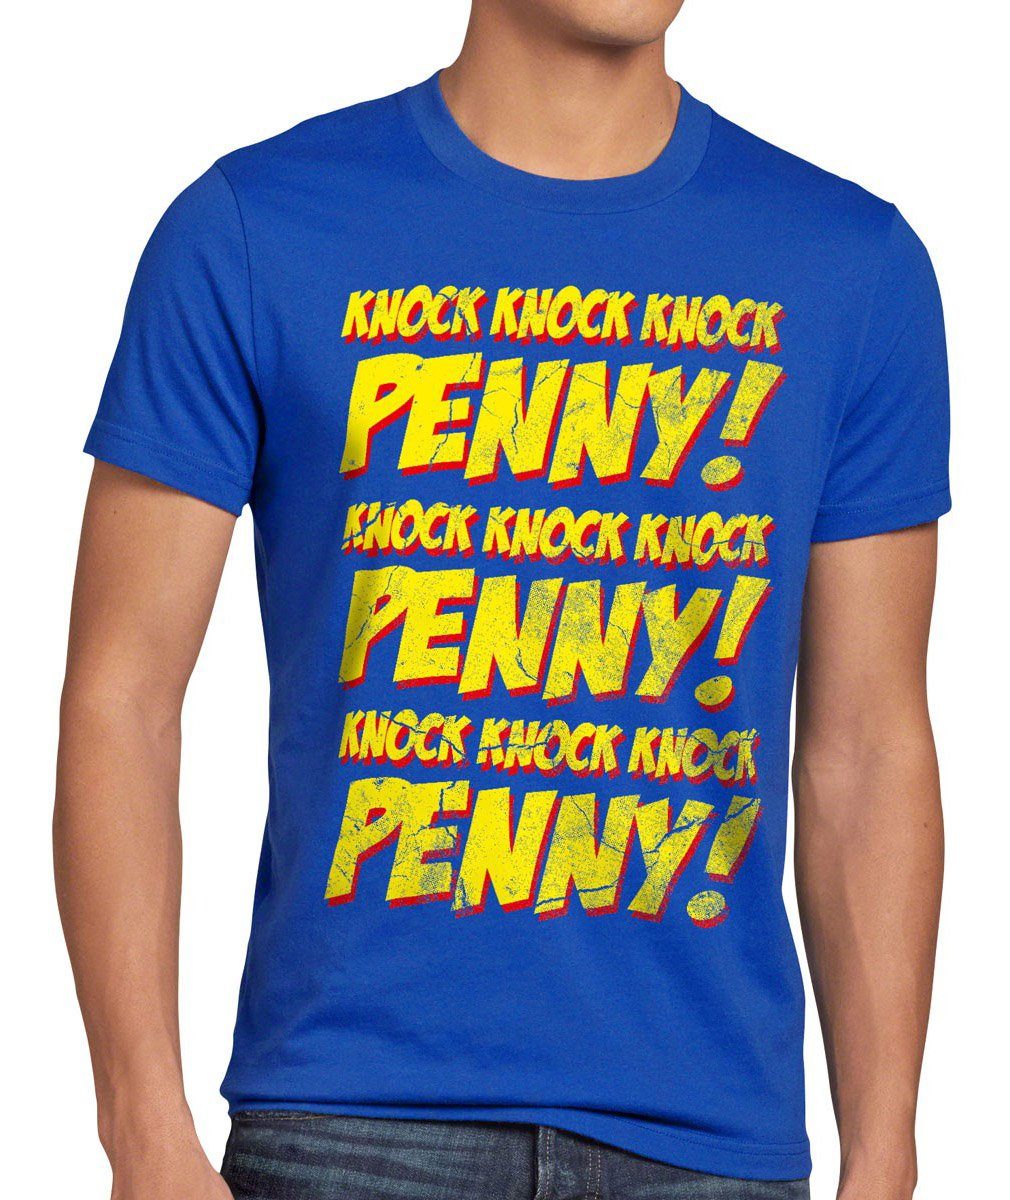 theory leonard comic sheldon Penny T-Shirt style3 bang College knock Print-Shirt Herren blau big cooper